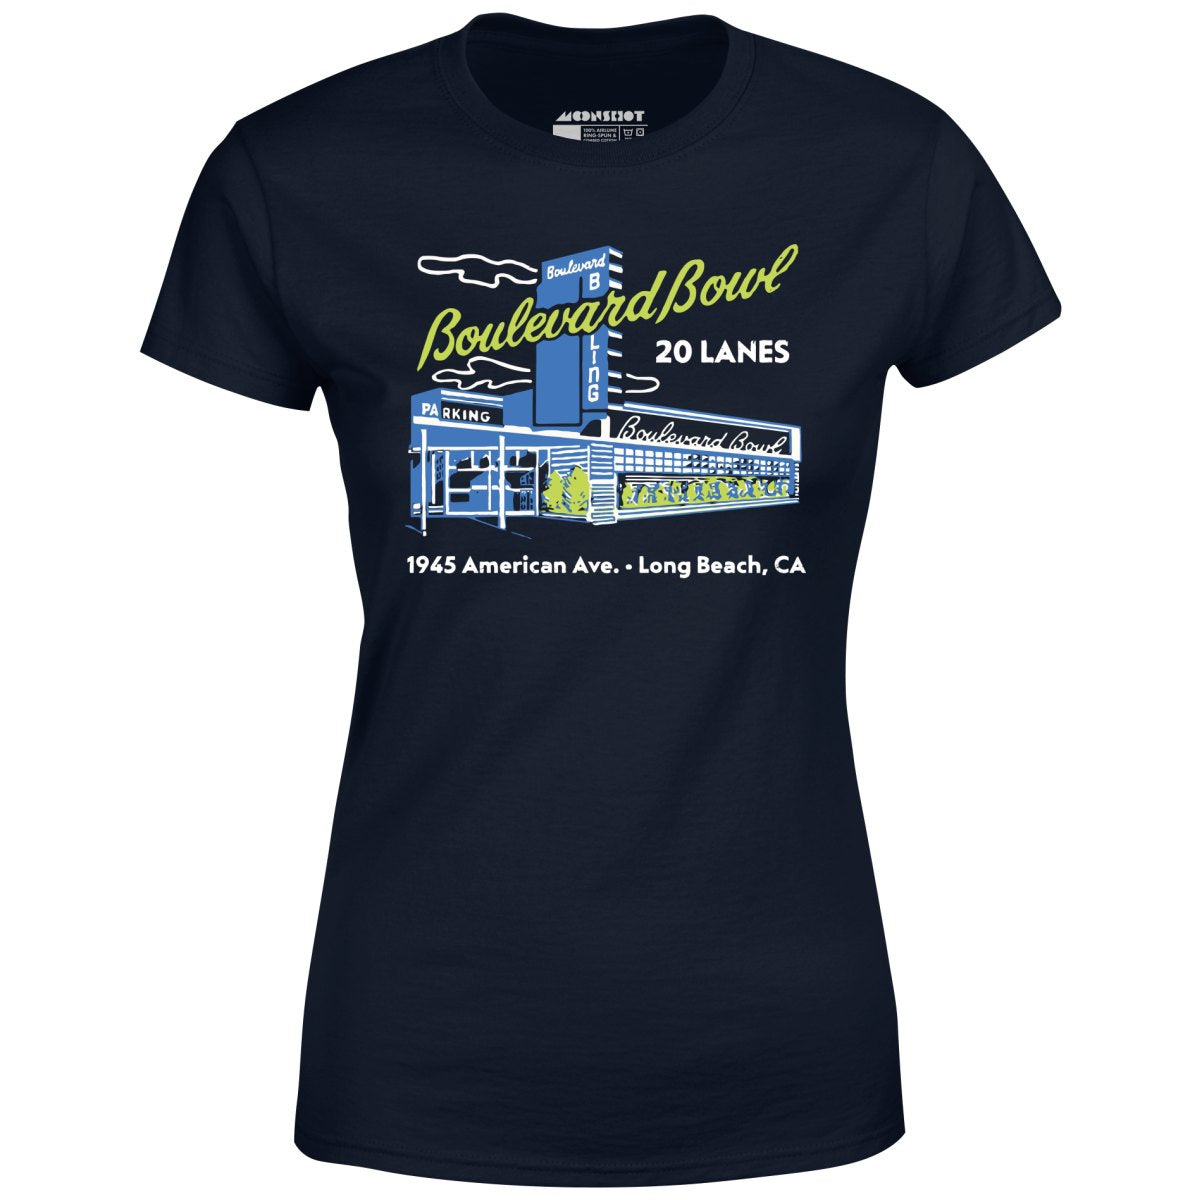 Boulevard Bowl - Long Beach, CA - Vintage Bowling Alley - Women's T-Shirt